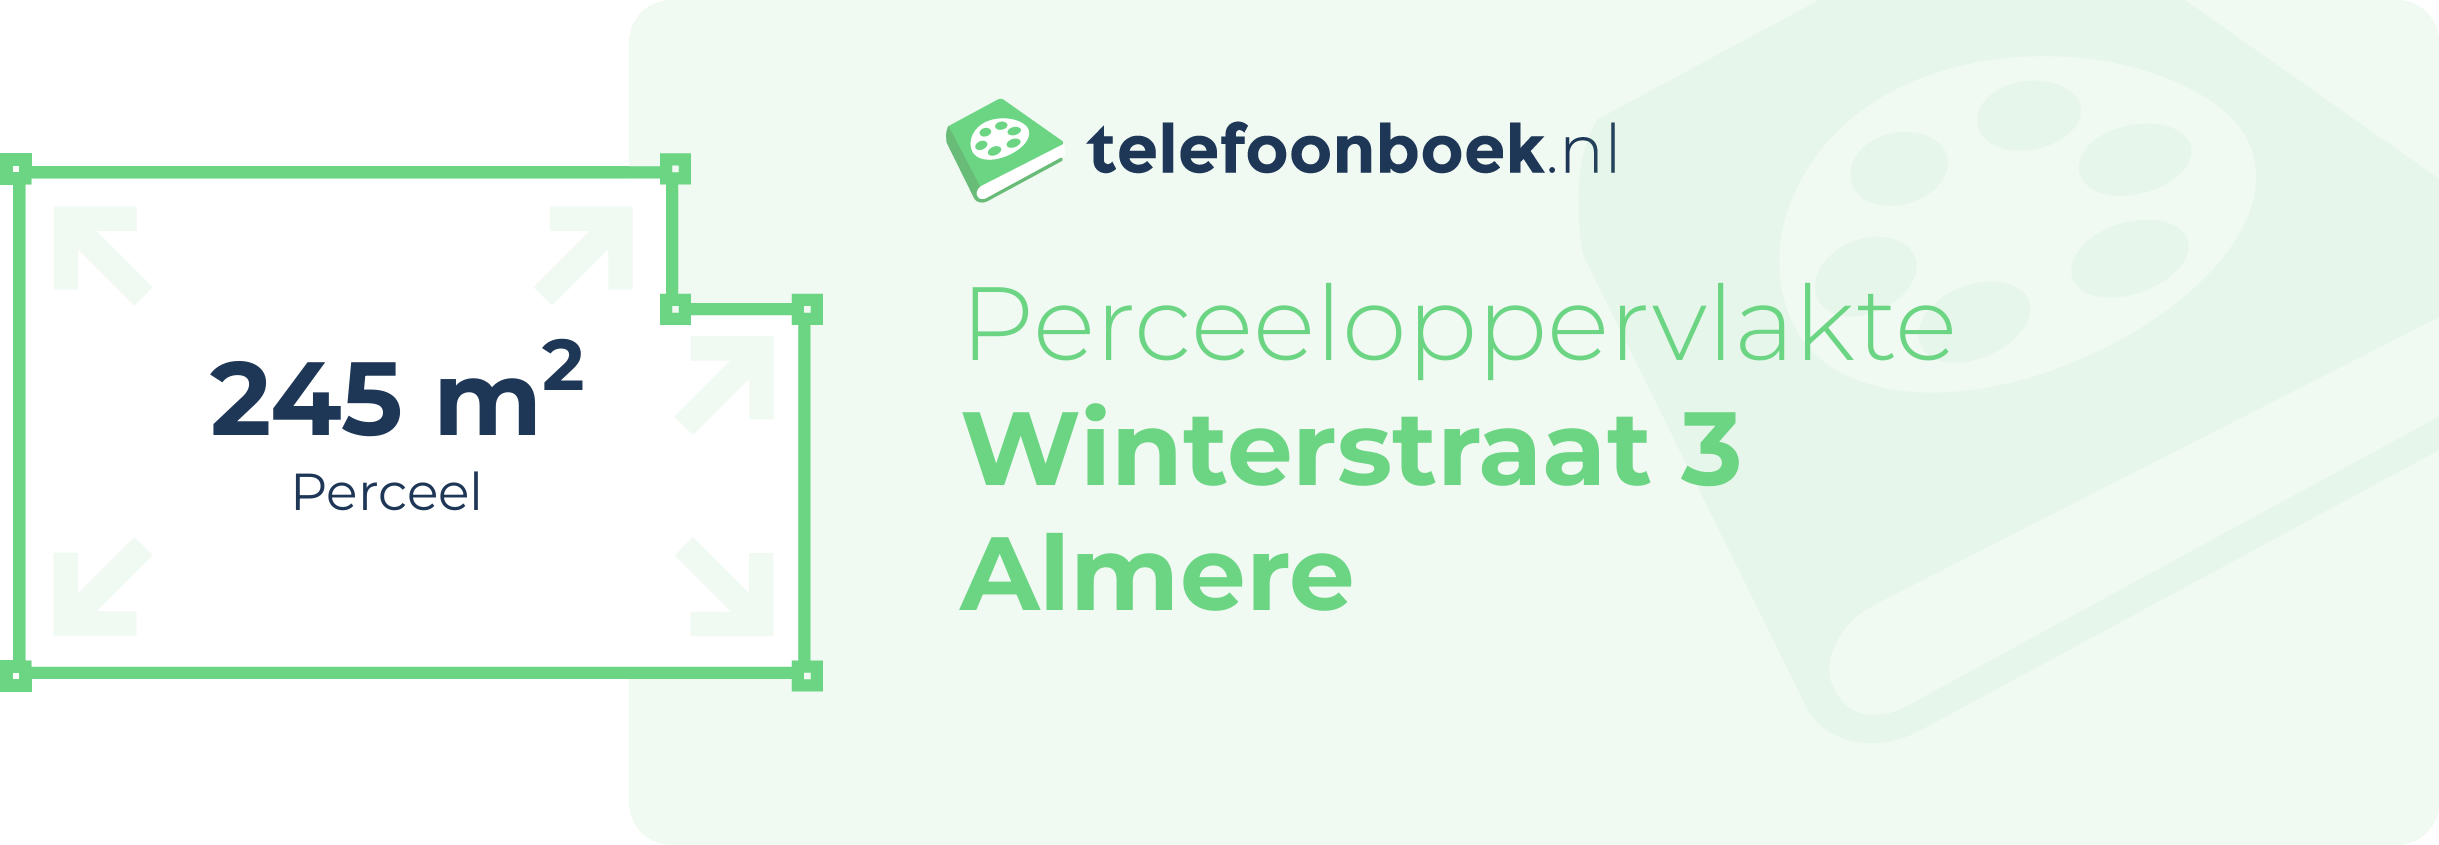 Perceeloppervlakte Winterstraat 3 Almere